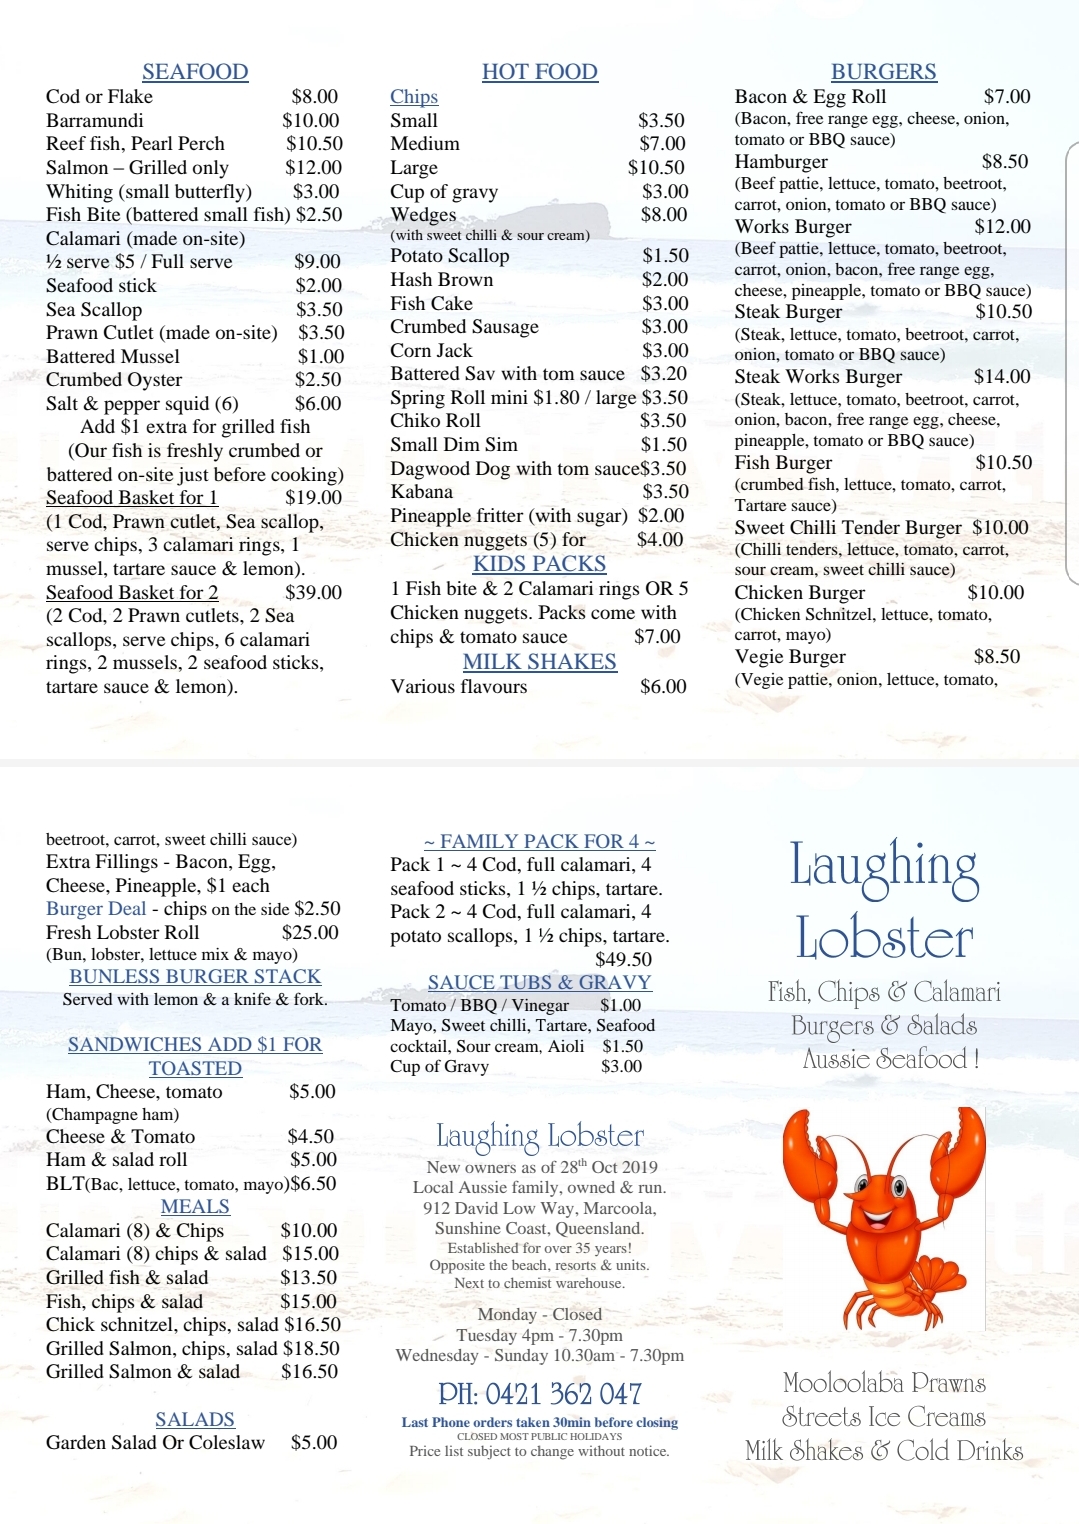 Laughing Lobster-Marcoola | 912 David Low Way, Marcoola QLD 4564, Australia | Phone: 0421 362 047